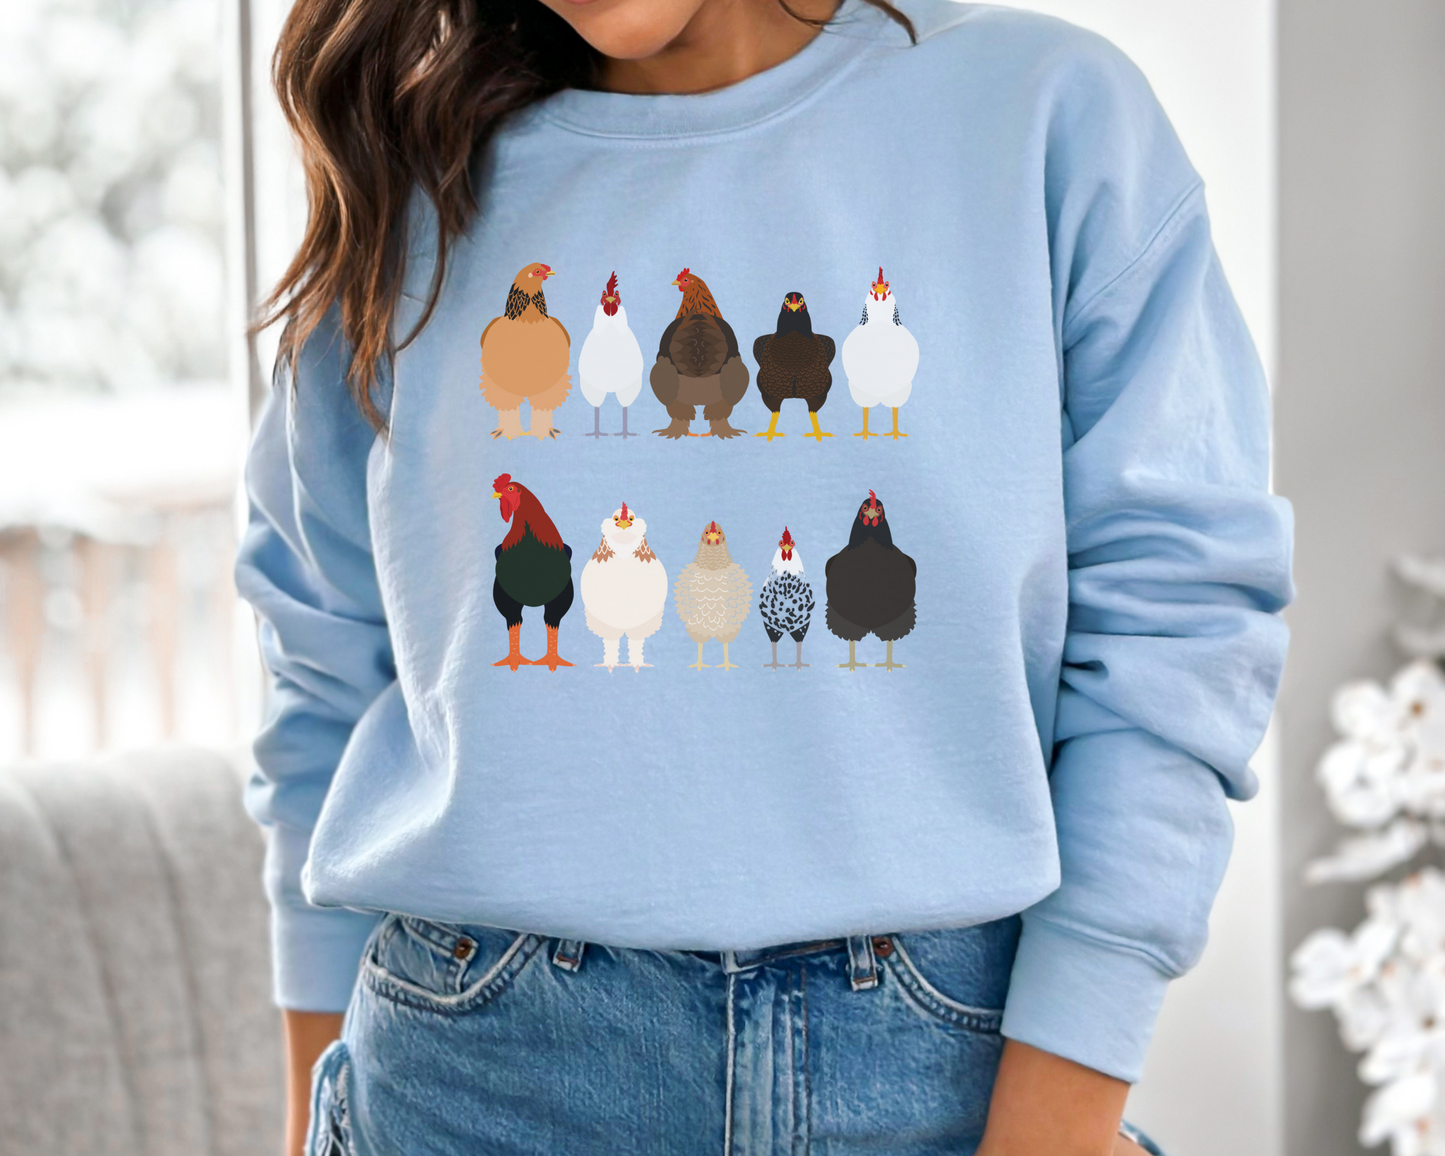 Chicken Sweatshirt Gift